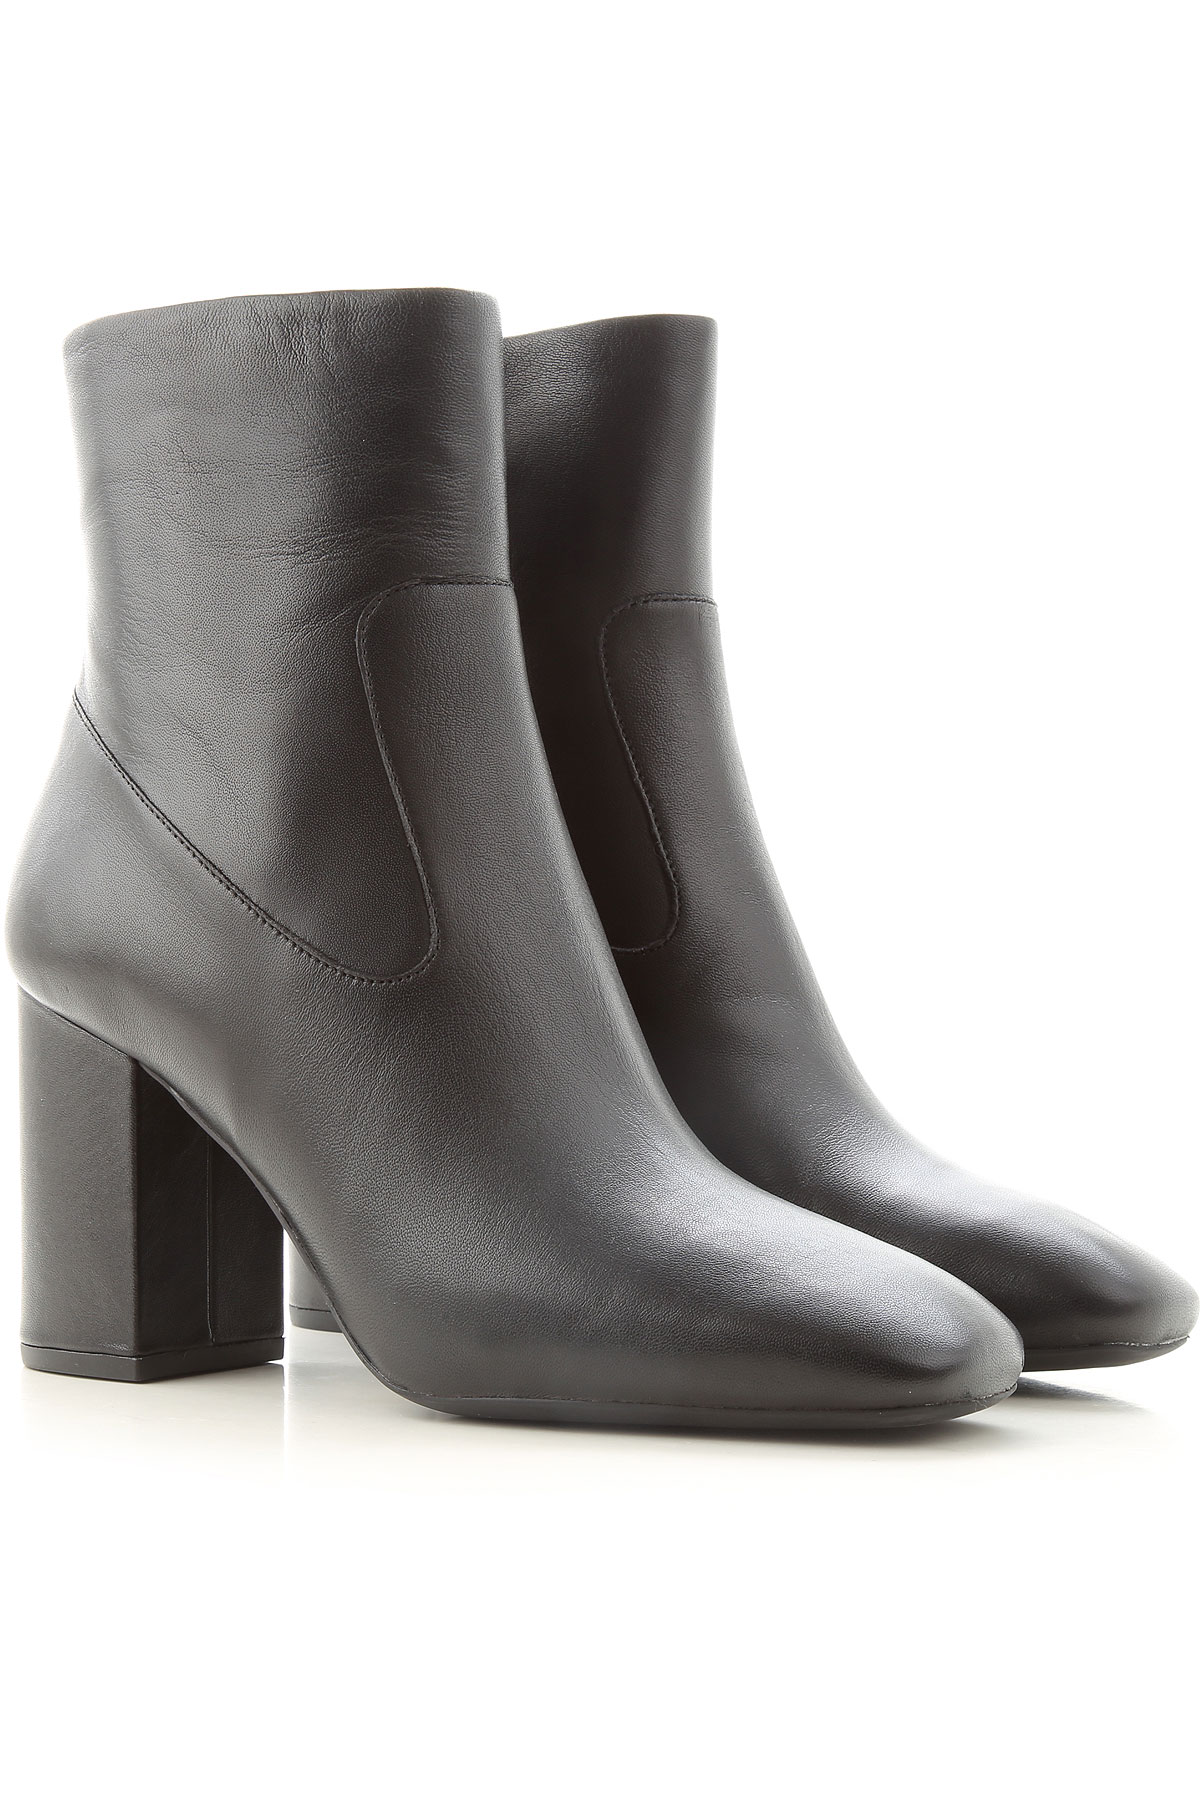 Womens Shoes Michael Kors, Style code: 40f0mrhe5l-black-